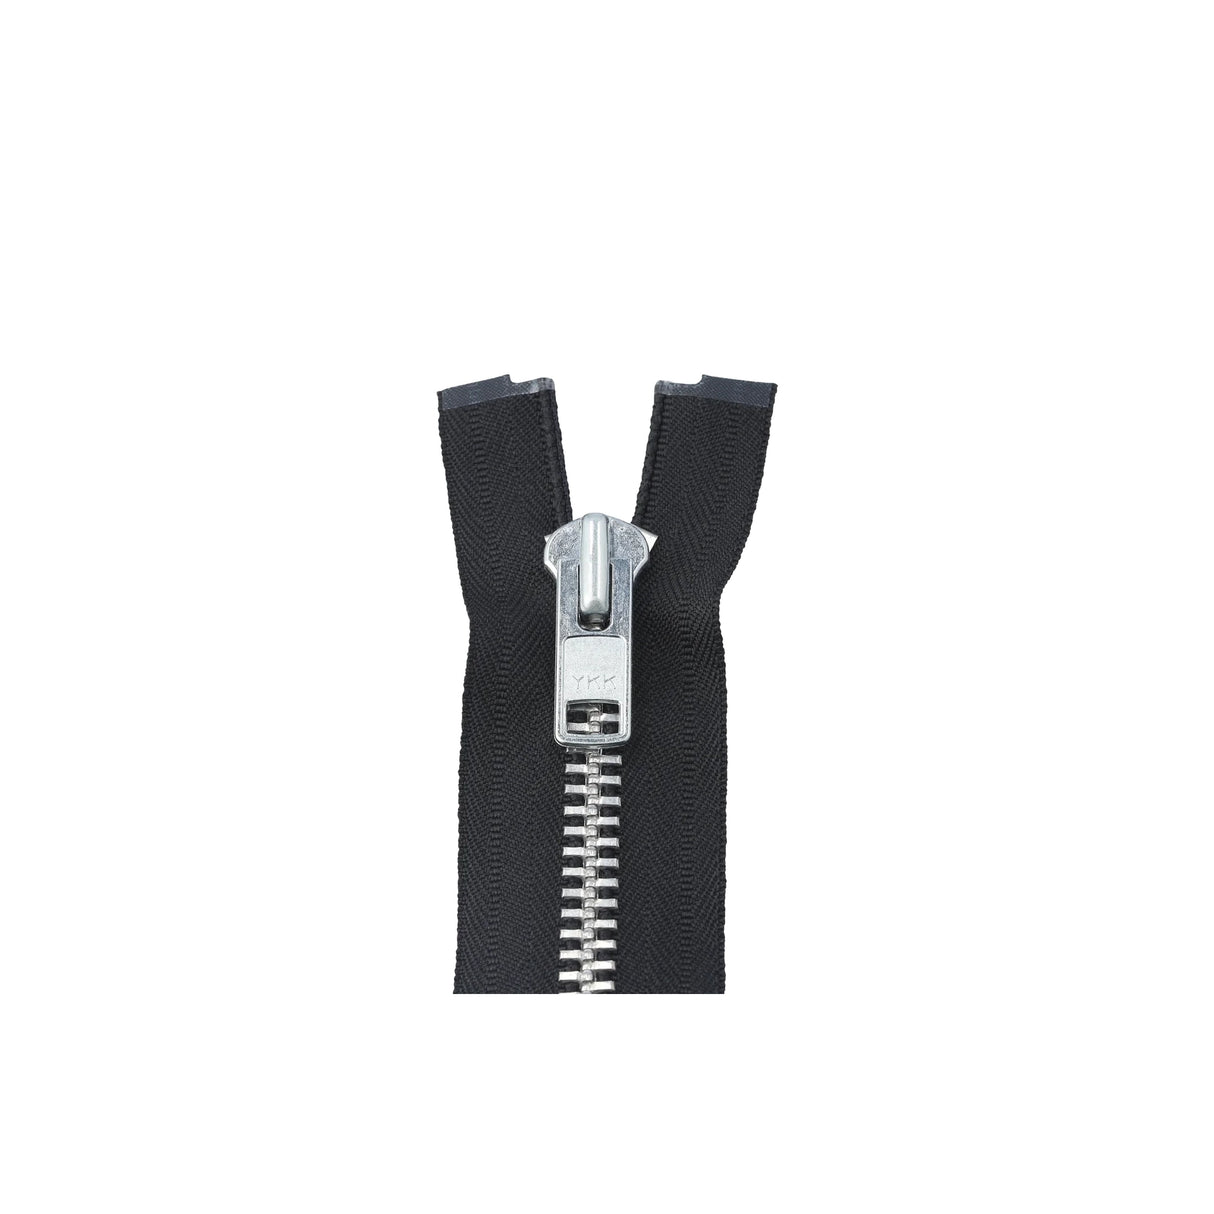 #10 Metal, Black, 20" YKK Separating Jacket Zipper with Aluminum Teeth, #9JK-20-BLK-N